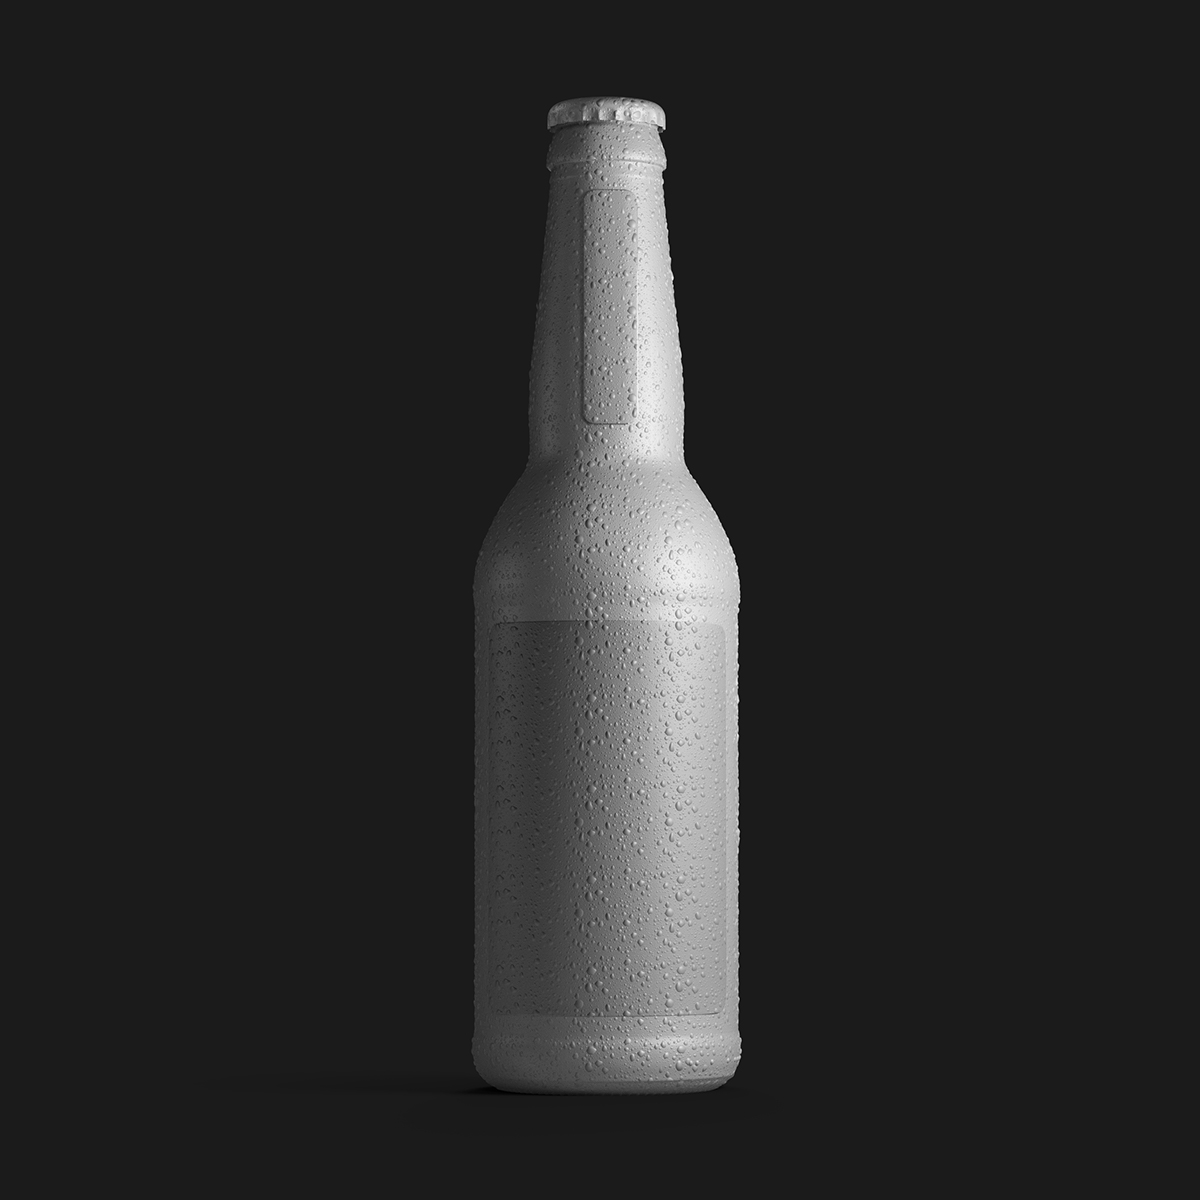 2D 3D Render CGI wacom vray compositing Post Production beer alcohol